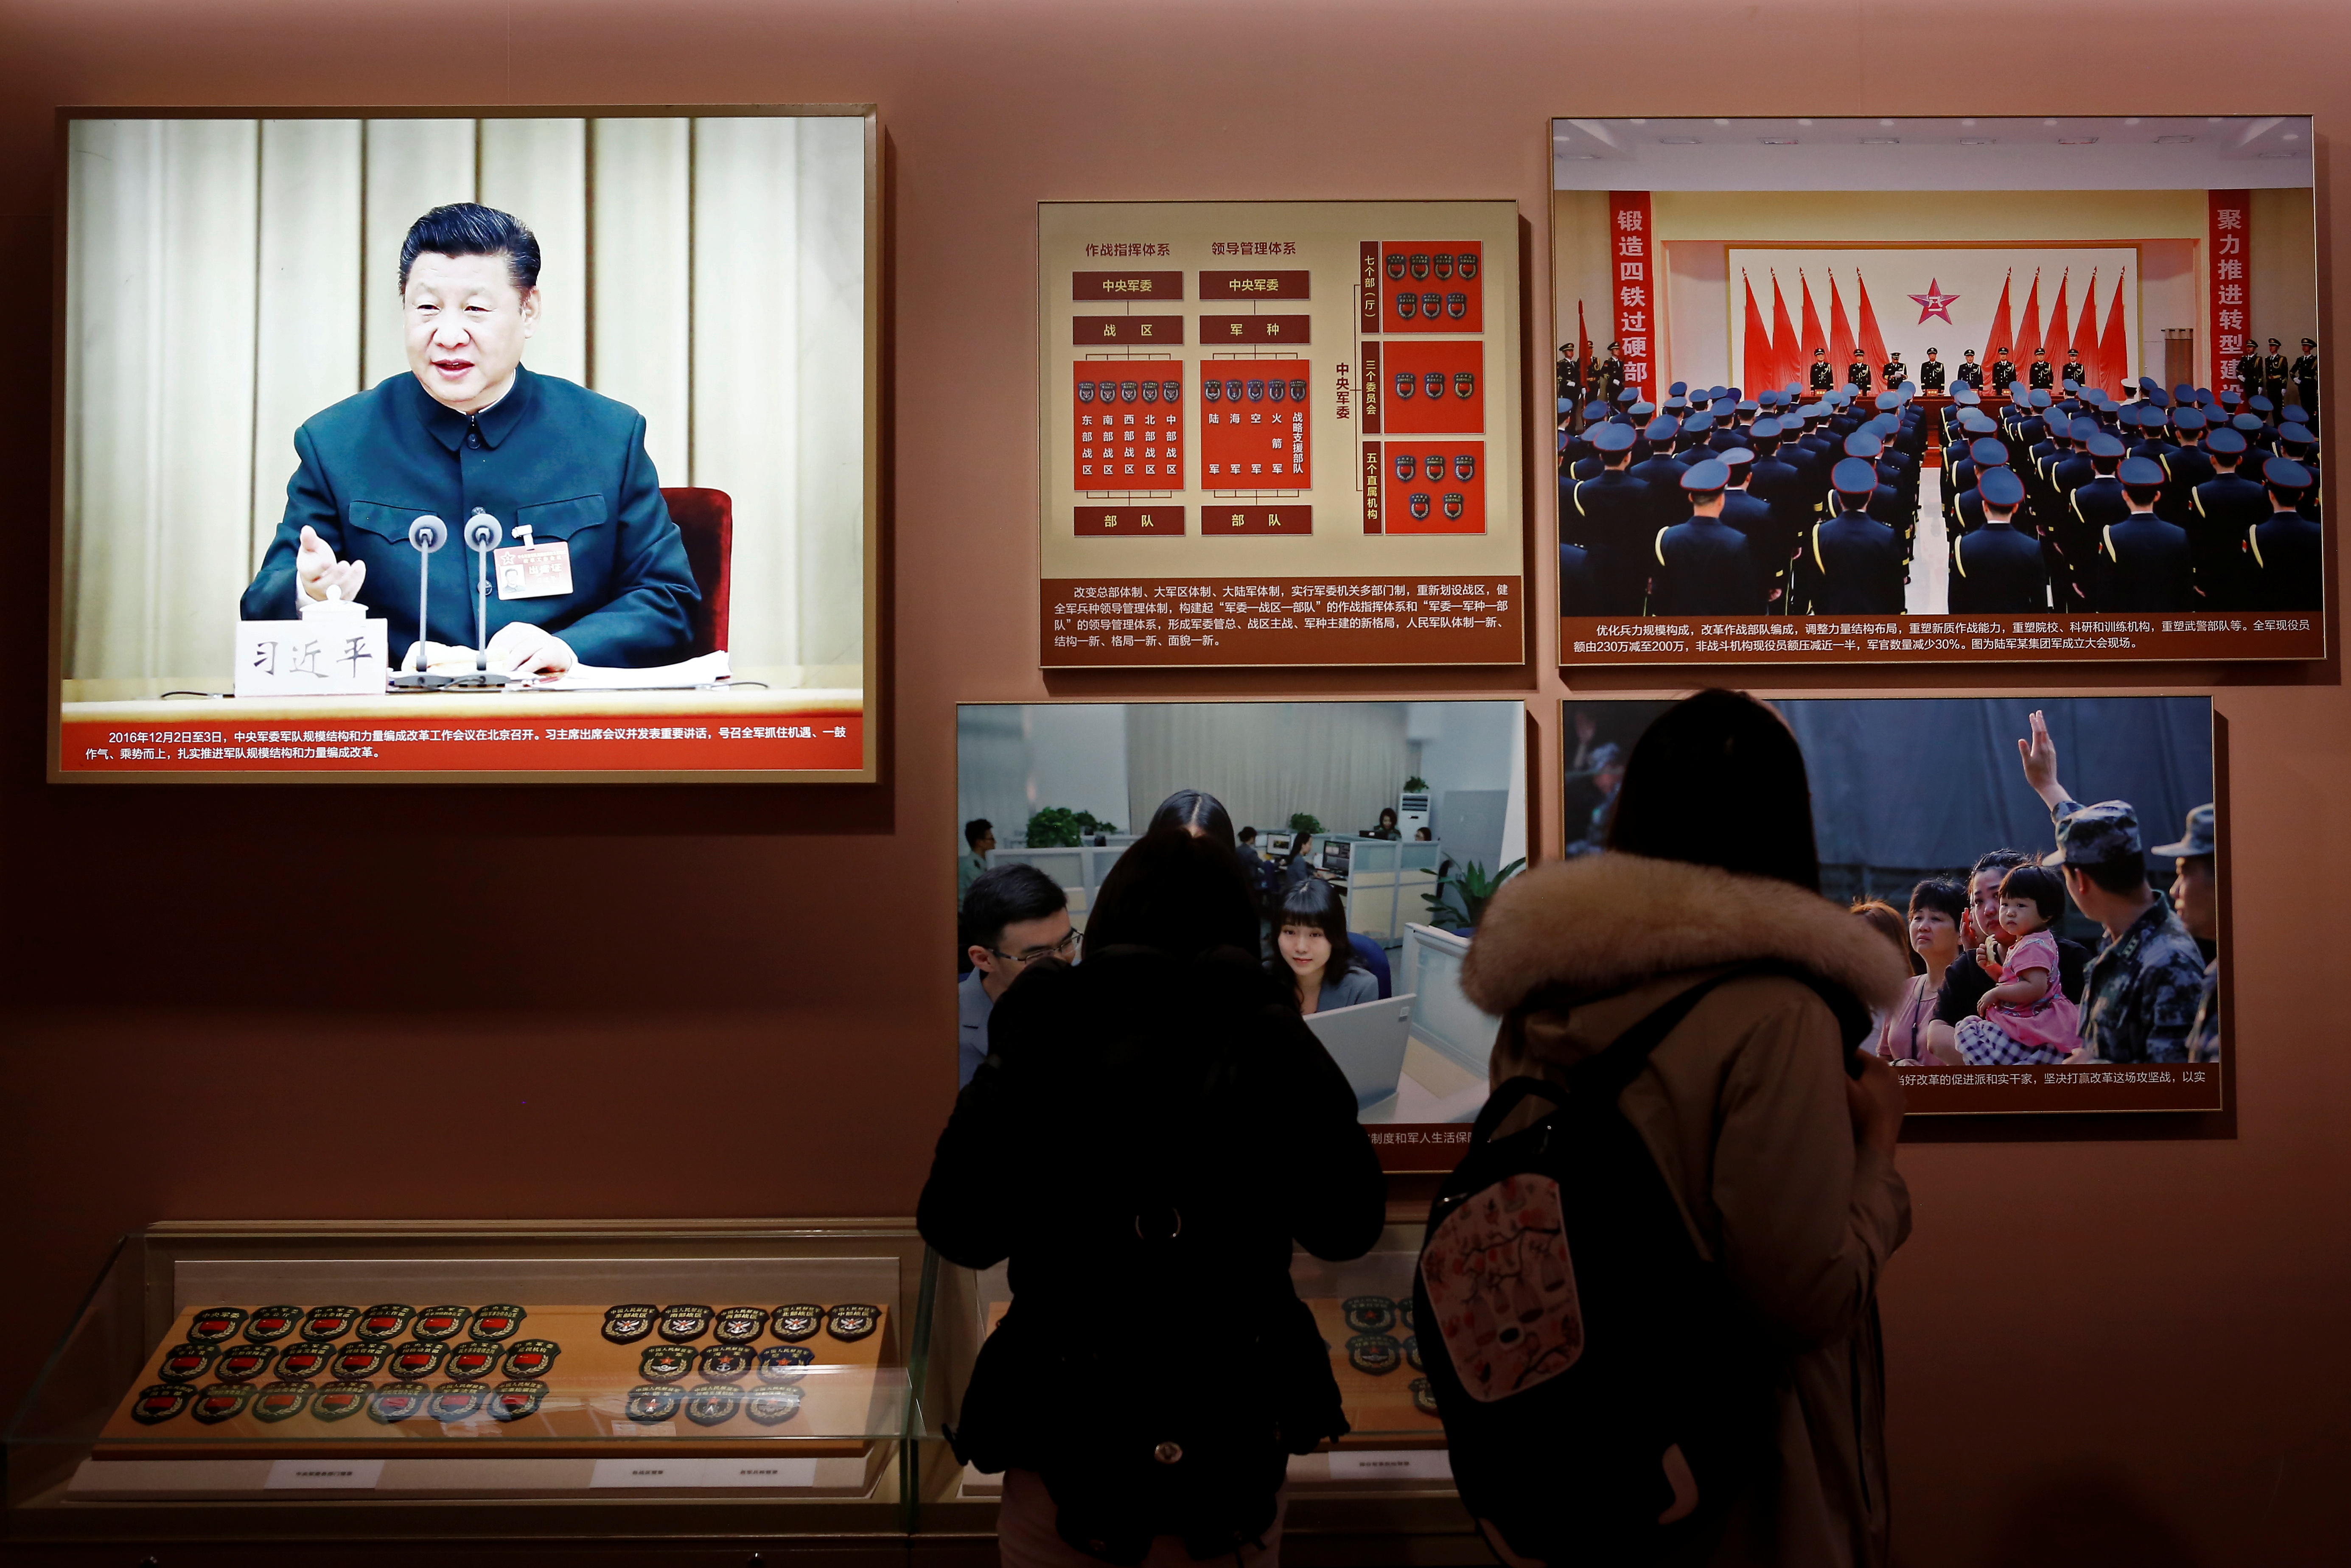 Imágenes en pantalla del presidente Xi Jinping, en Pekín.